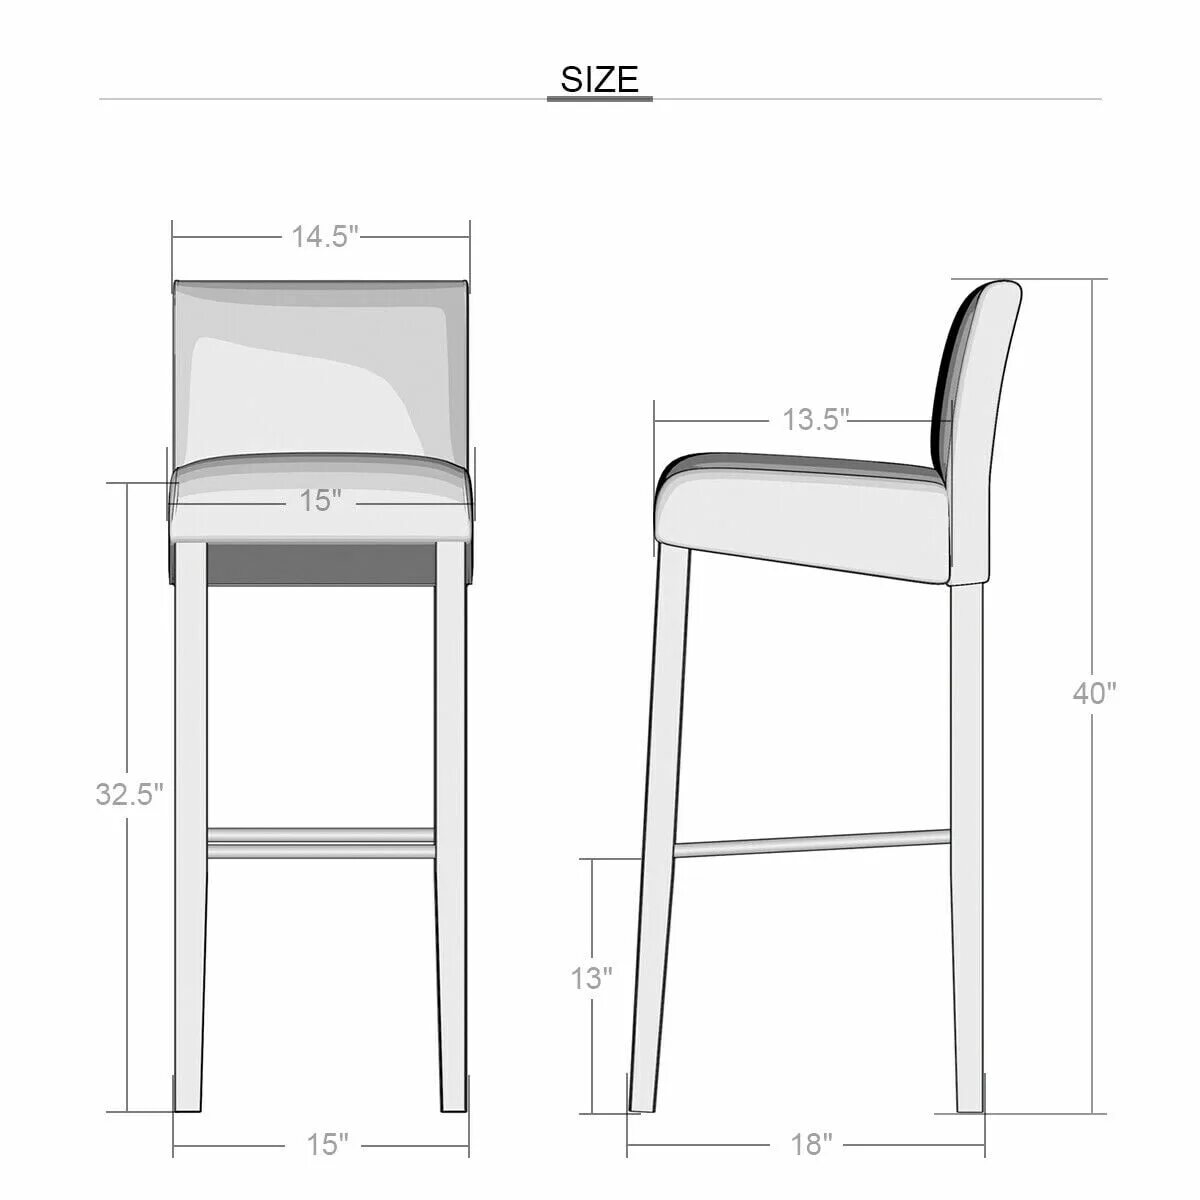 Барный стул высота. Bar Stool Size. Размеры стульев для бара. Bar Chair Dimensions. Code Bar Stool Размеры.